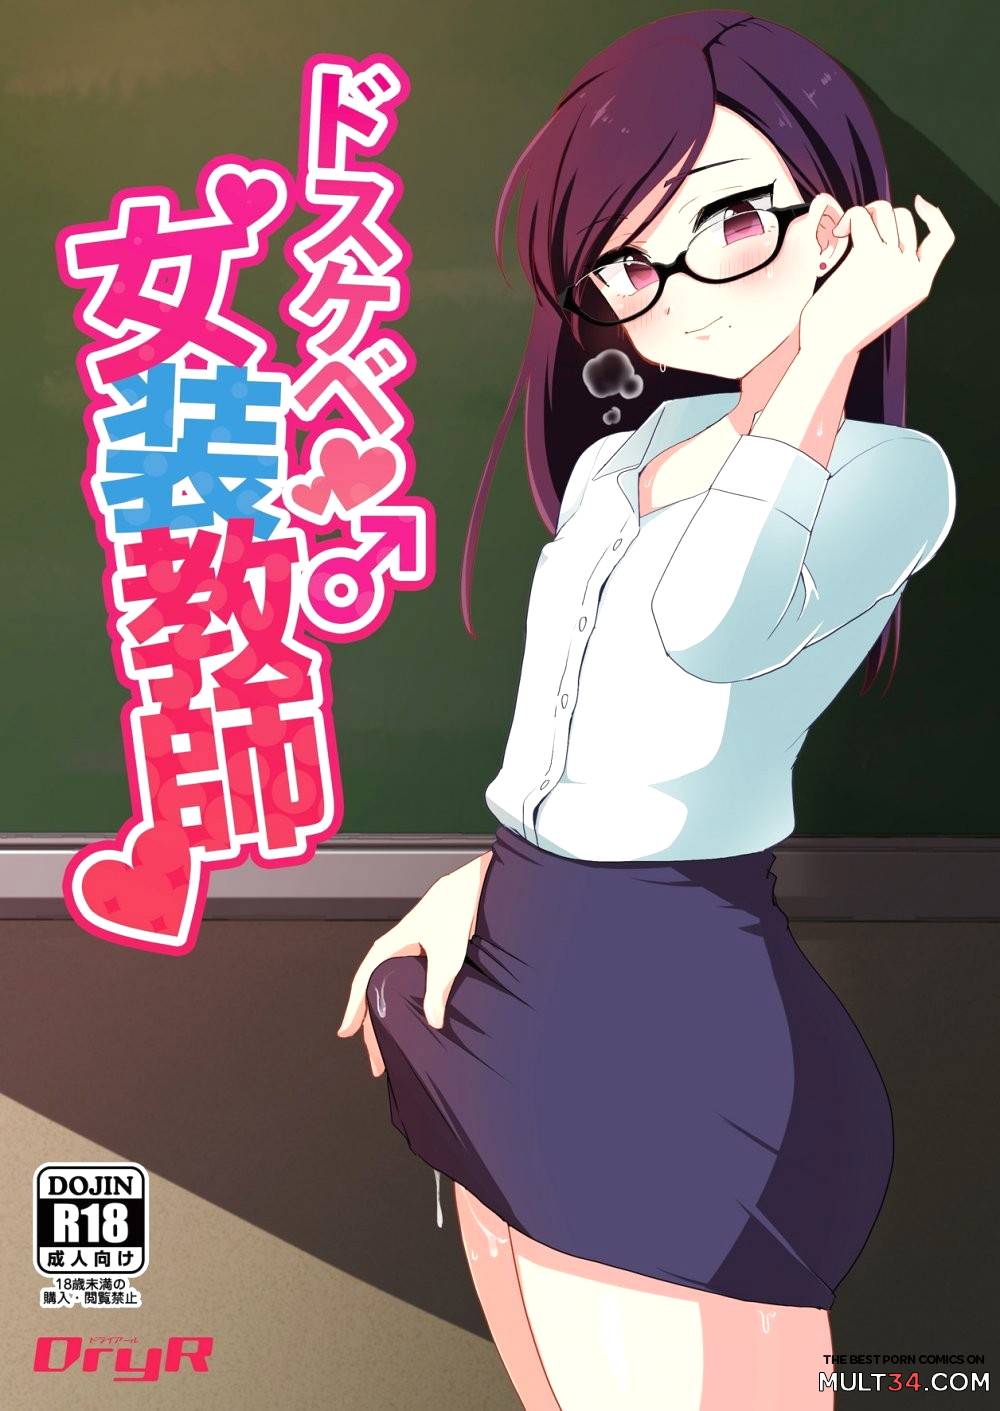 Anime crossdressing porn